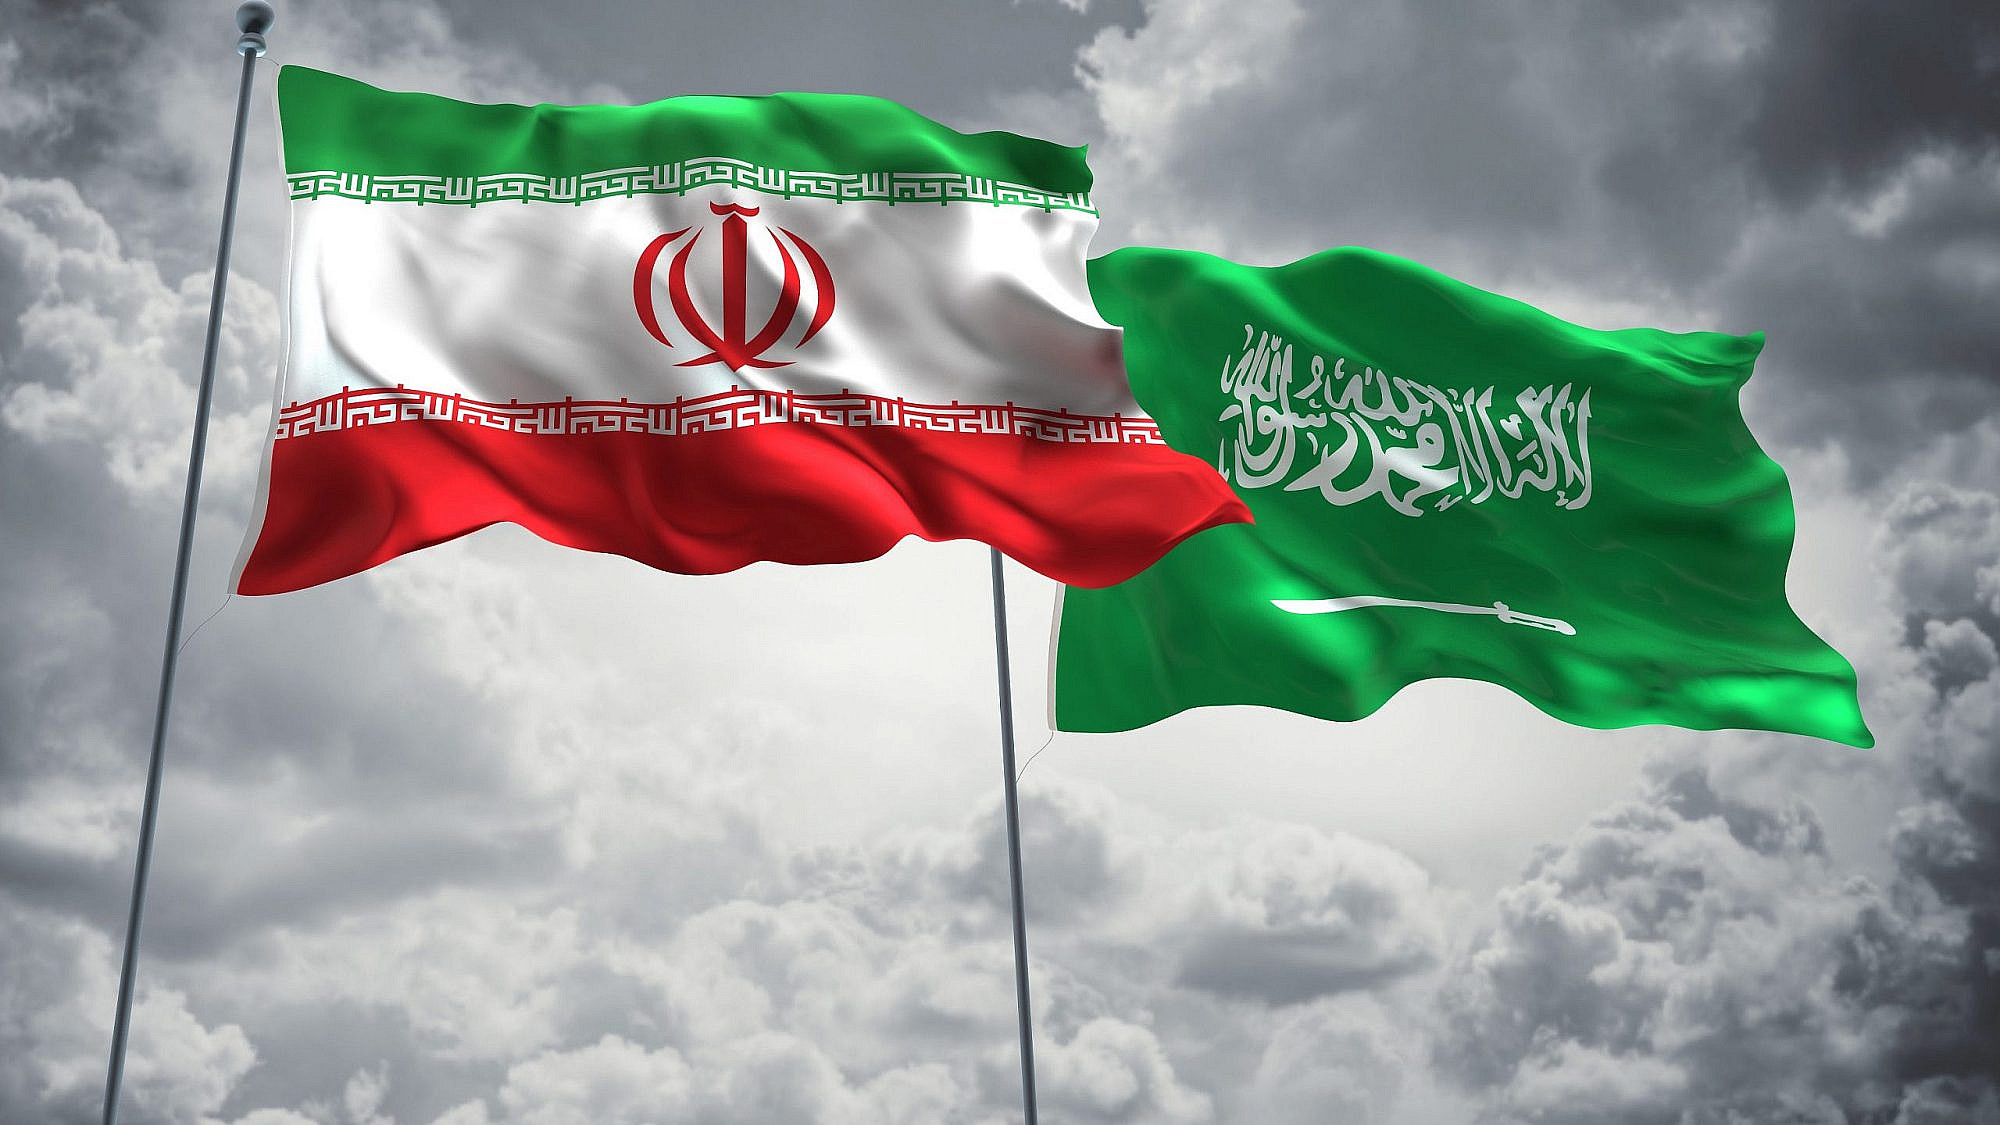 The flags of Iran and Saudi Arabia. Credit: FreshStock/Shutterstock.